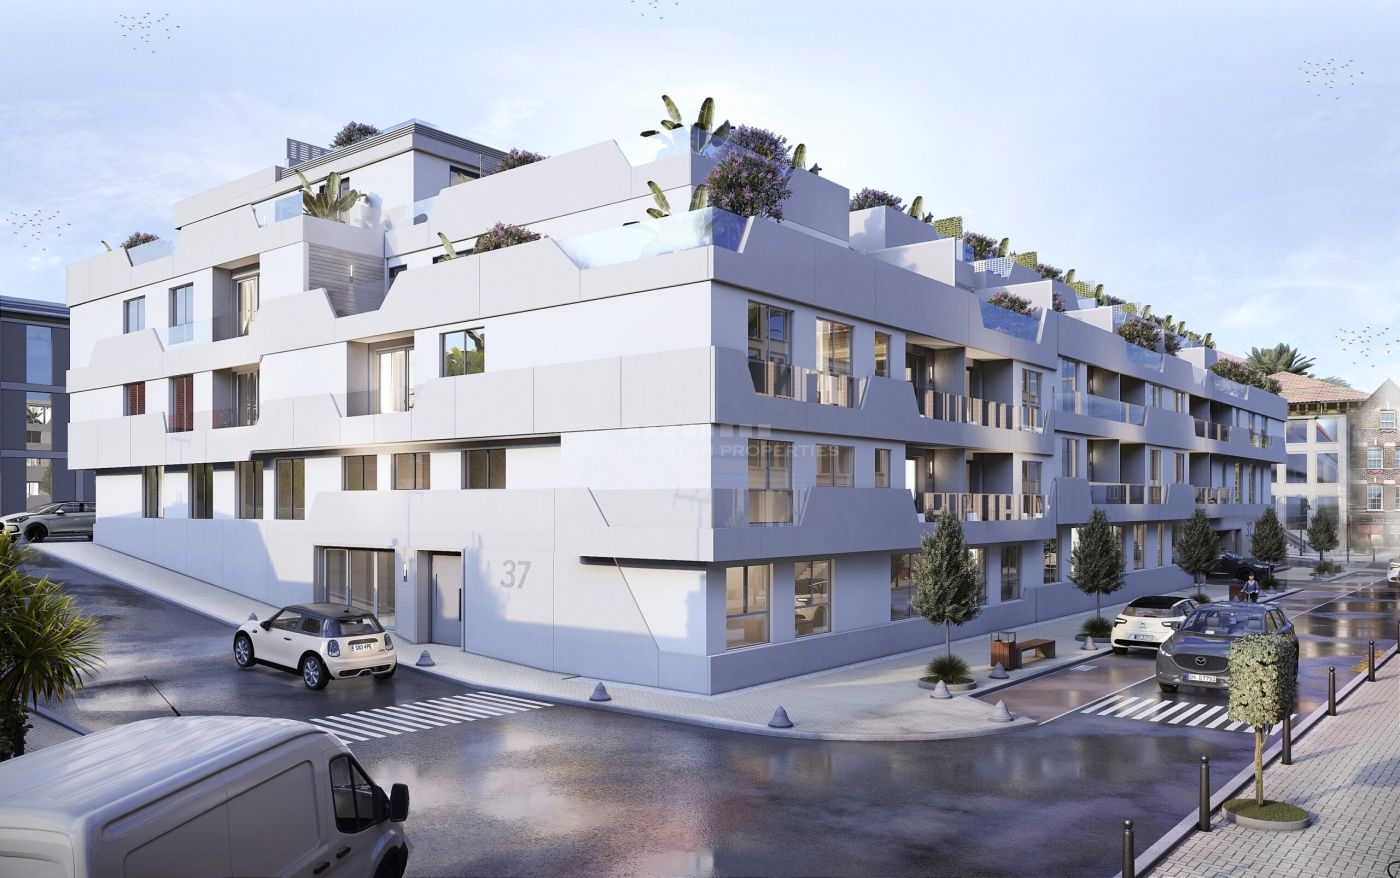 New promotion of high-quality apartments in Las Lagunas de Mijas.